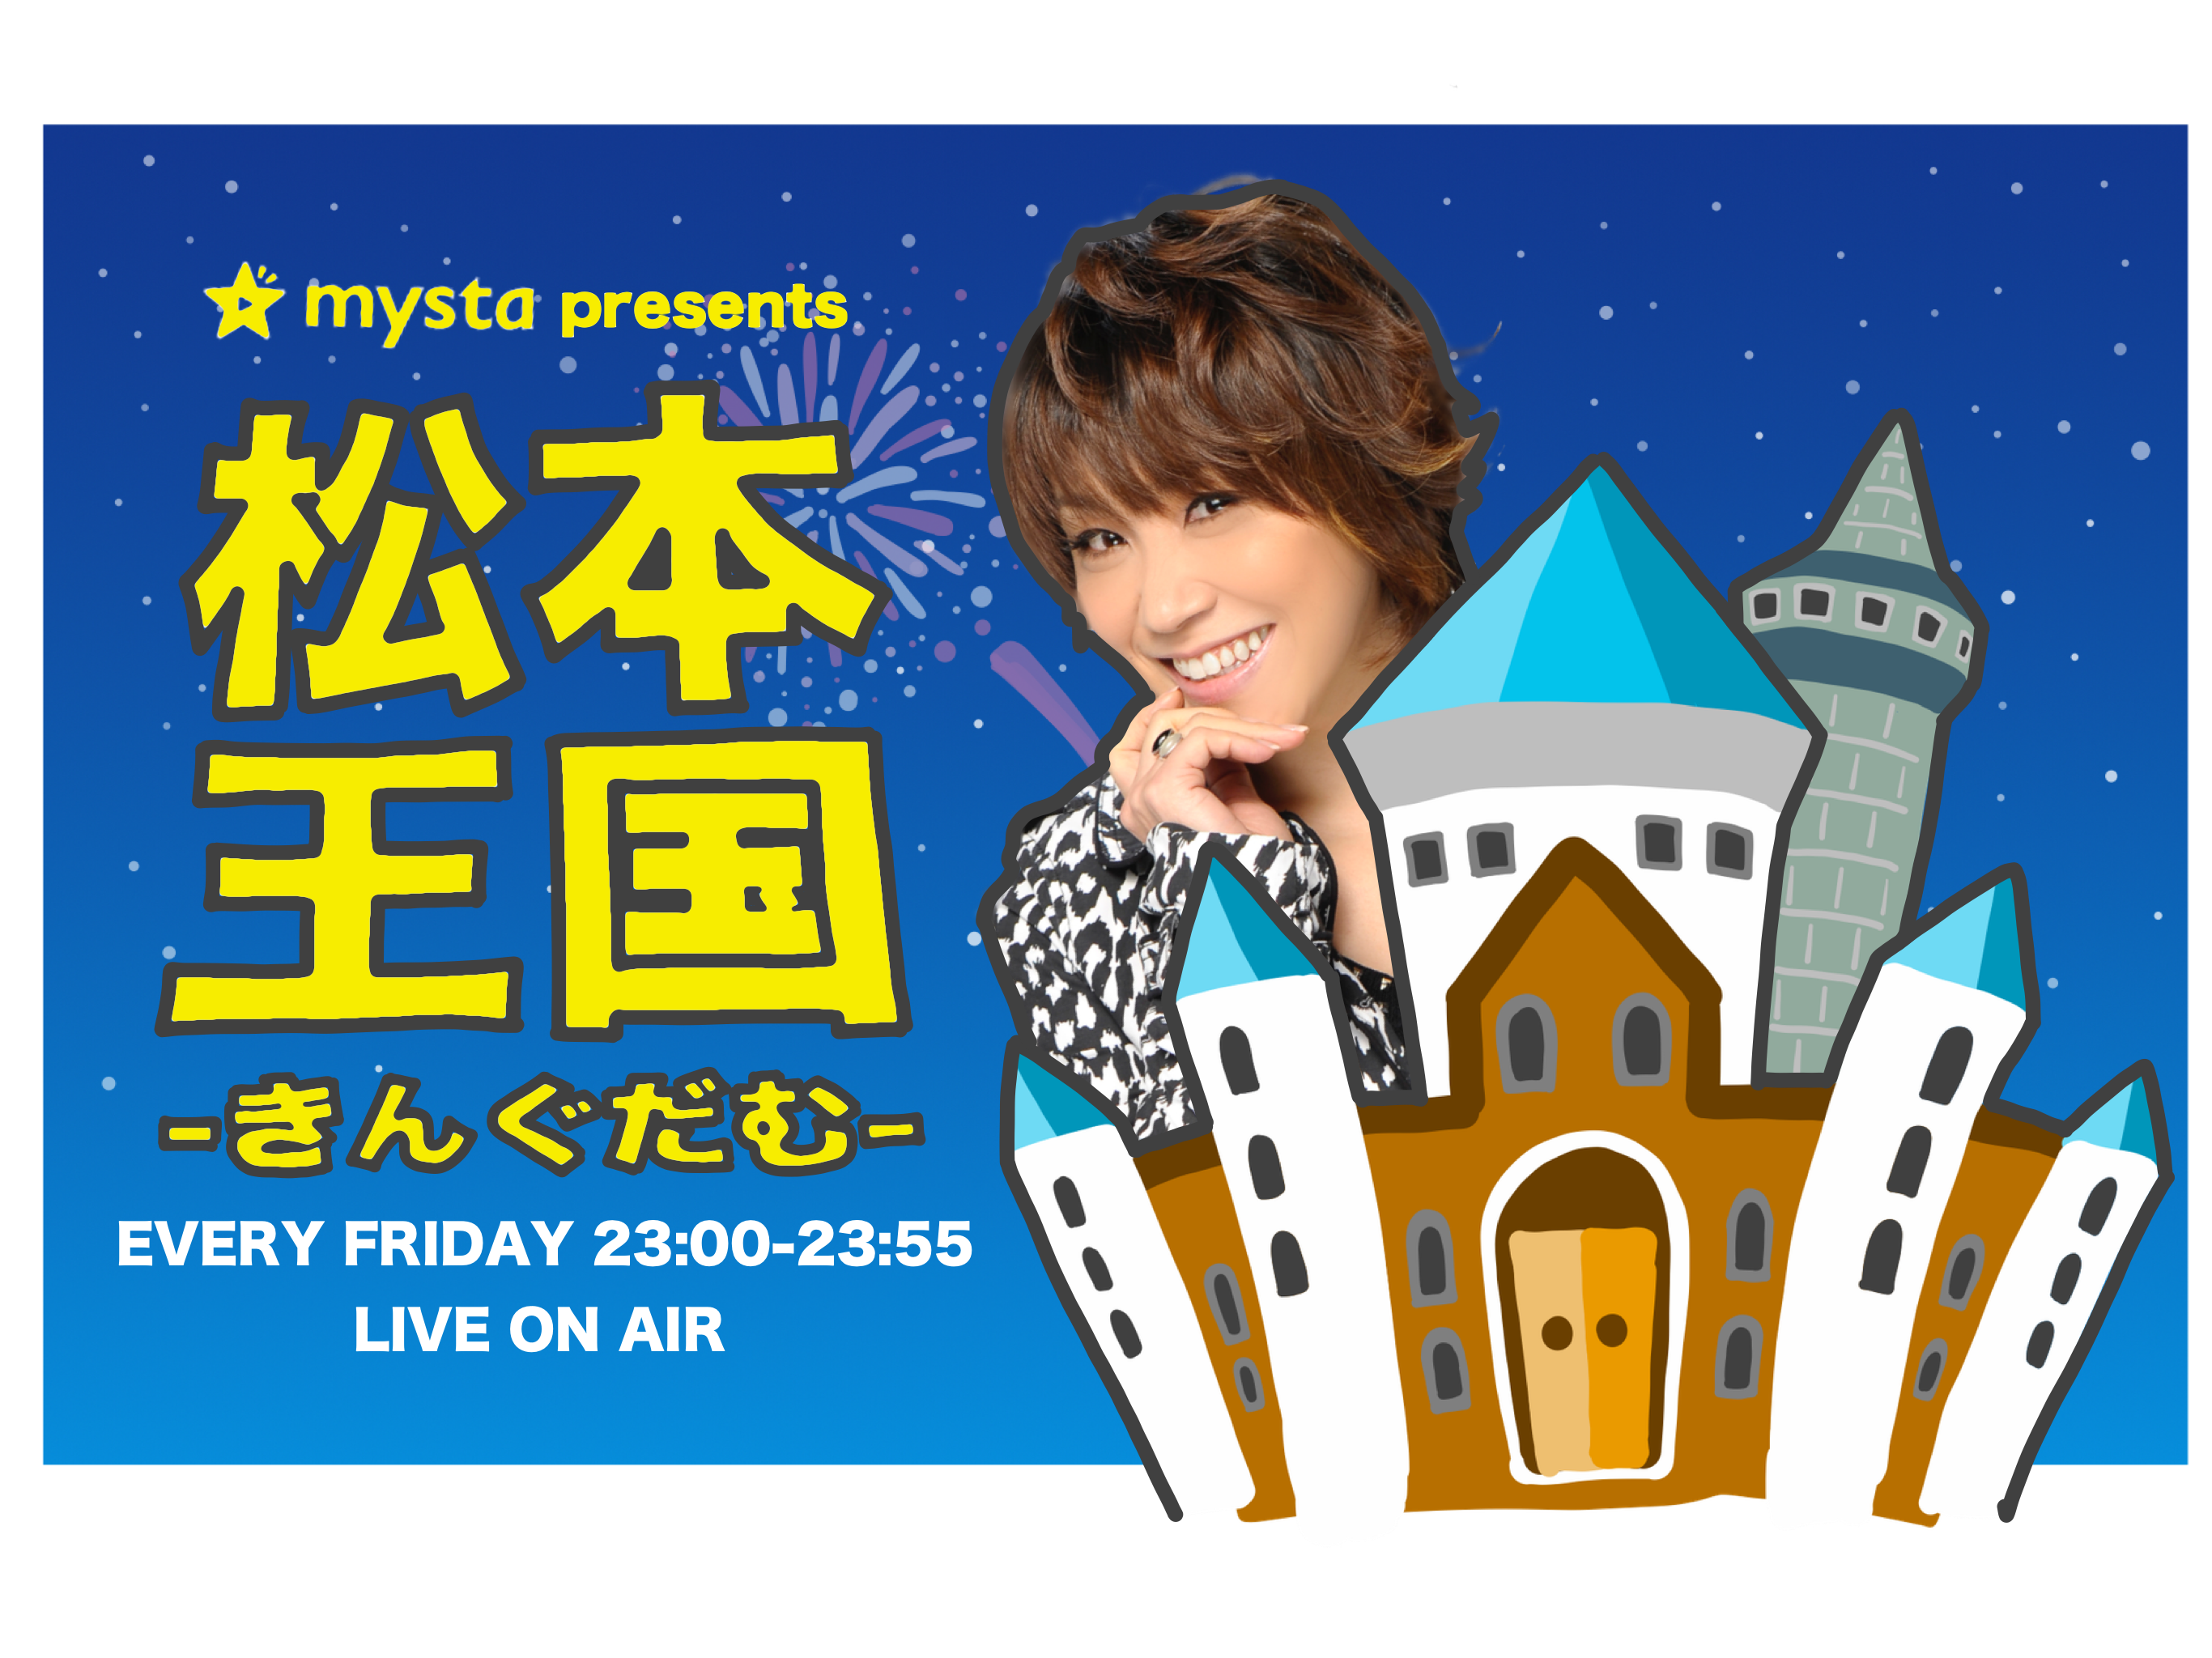 On Air Report - mysta presents 松本王国-きんぐだむ- -TOKYO FM 80.0 